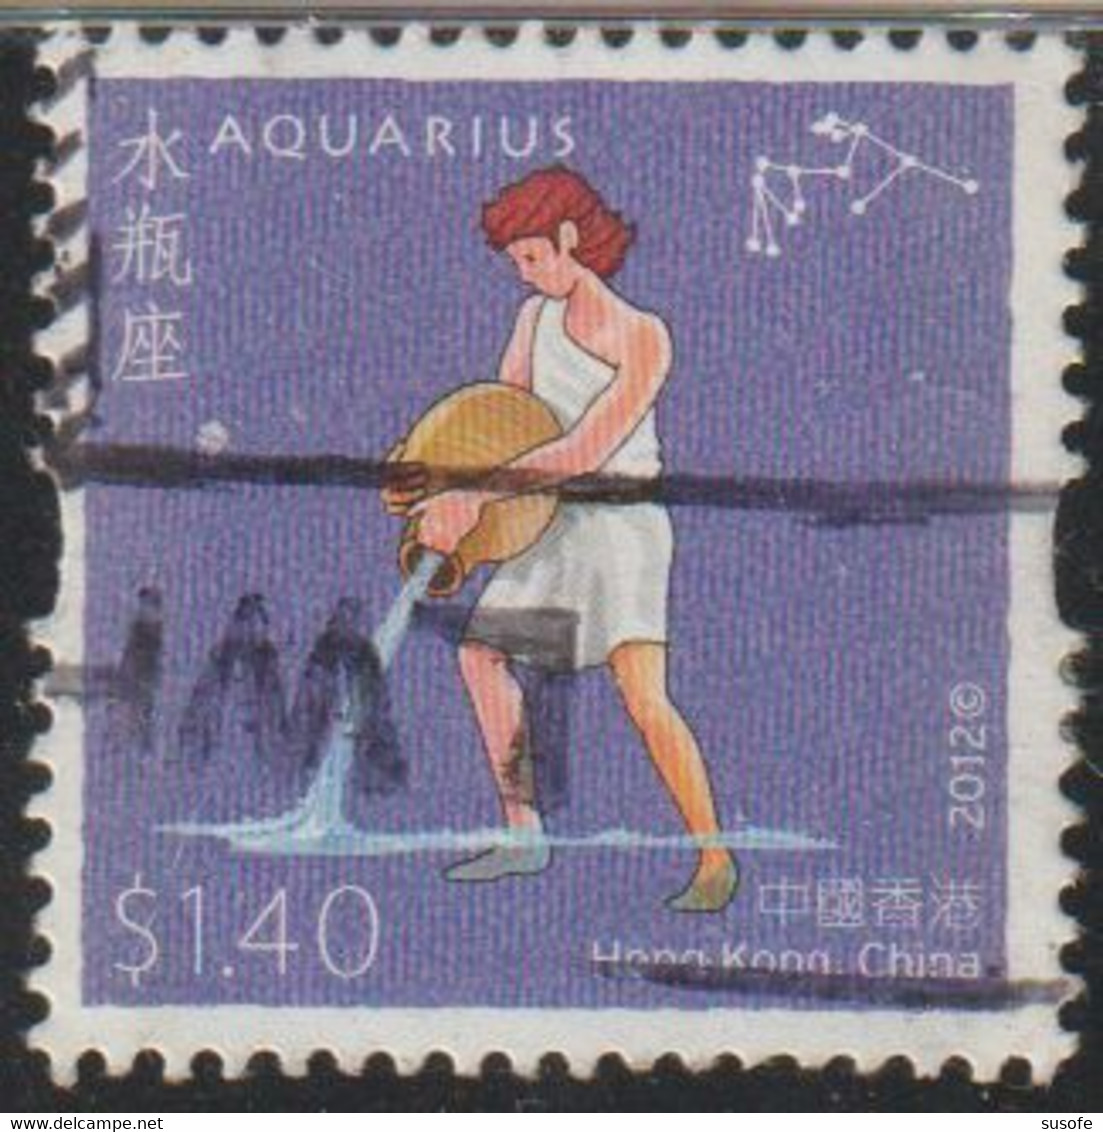 Hong Kong China 2012 Scott 1738 Sello º Signos Del Zodiaco Acuario Aquarius Michel 1739 Yvert 1606 Stamps Timbre - Gebruikt